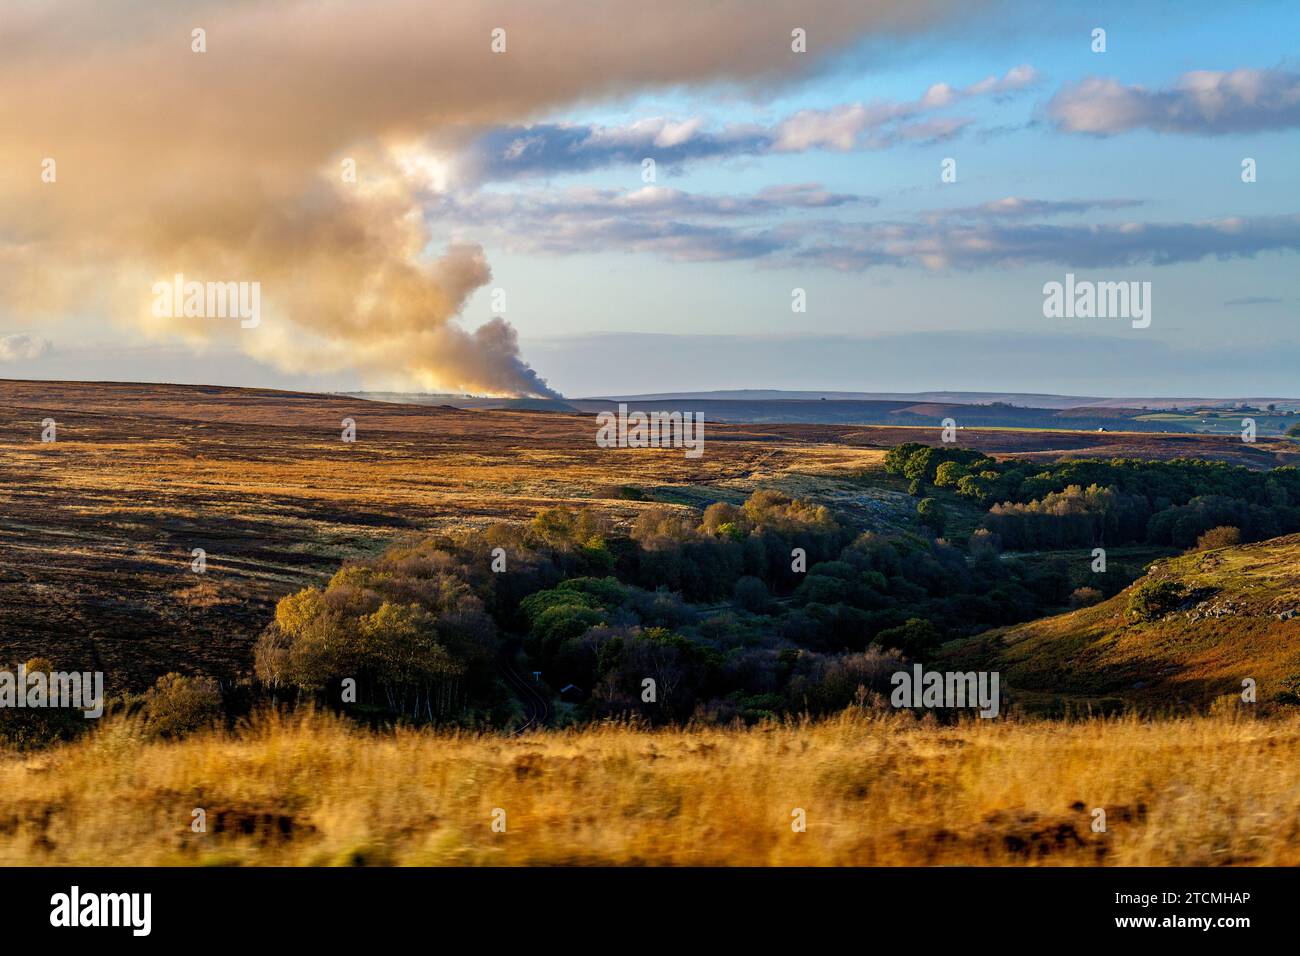 Fumée de Burning Field, Goathland, North York Moors, North Yorkshire, Royaume-Uni Banque D'Images